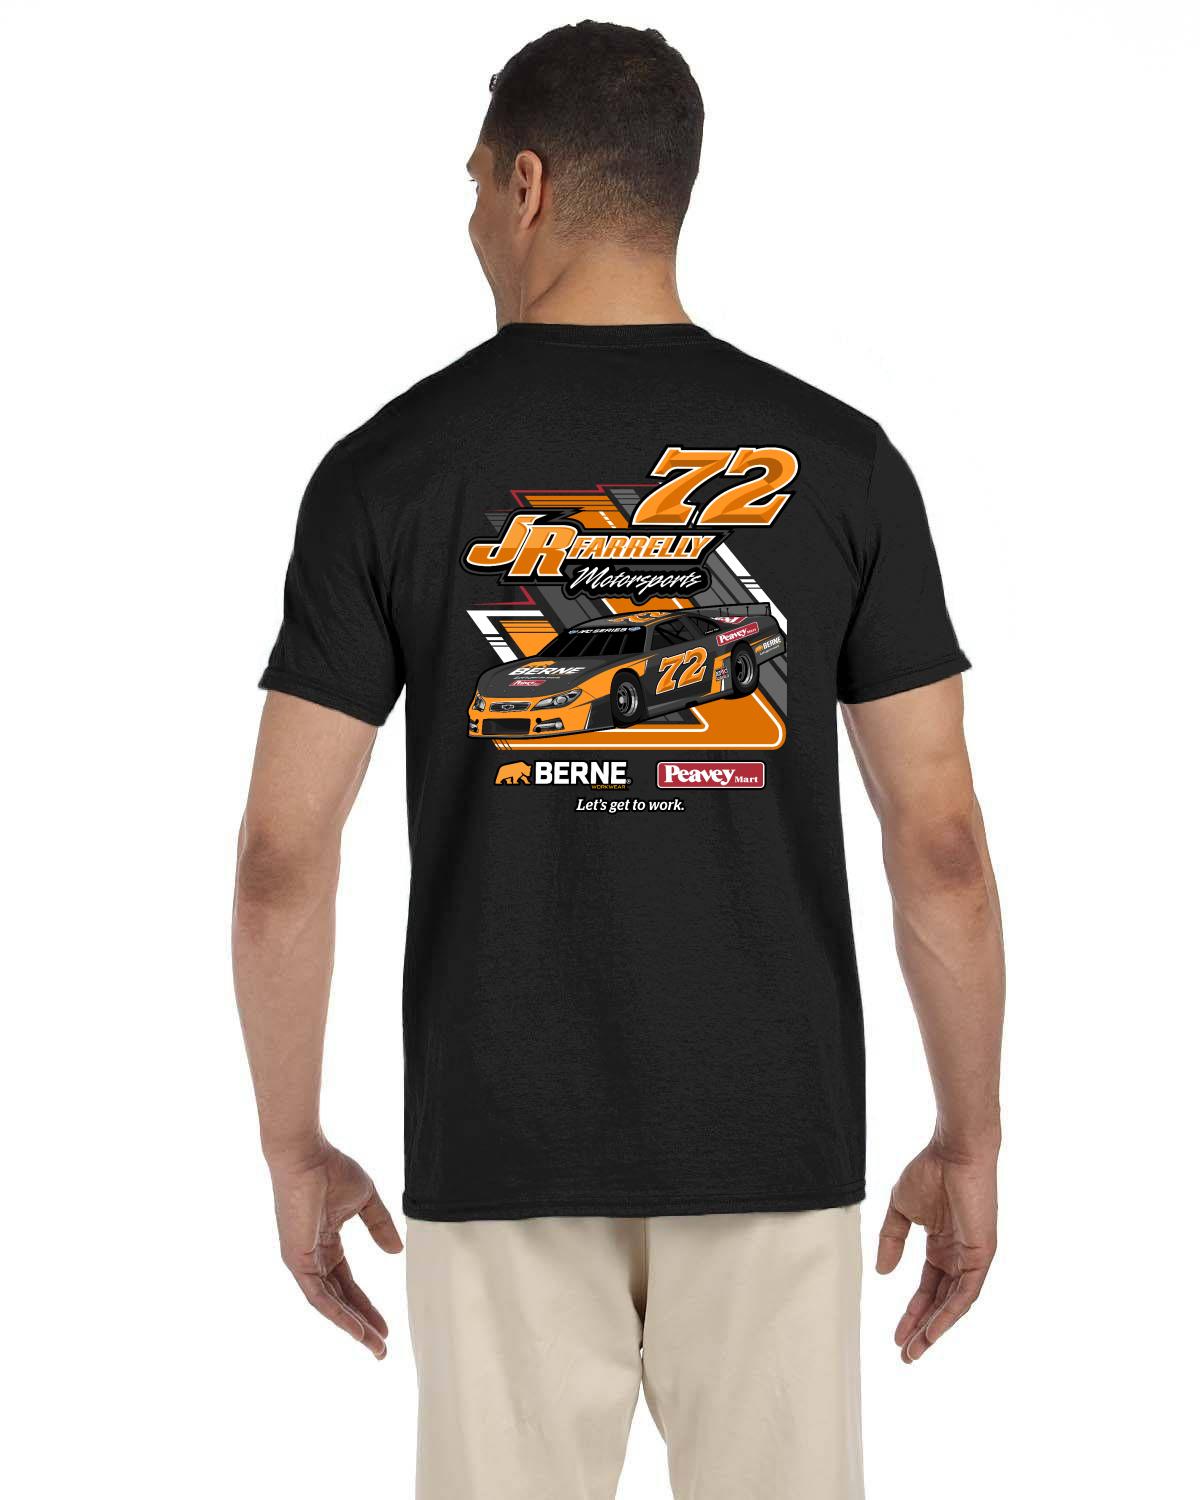 Jr. Farrelly Motorsports / BERNE - Peavey Men's Softstyle T-shirt